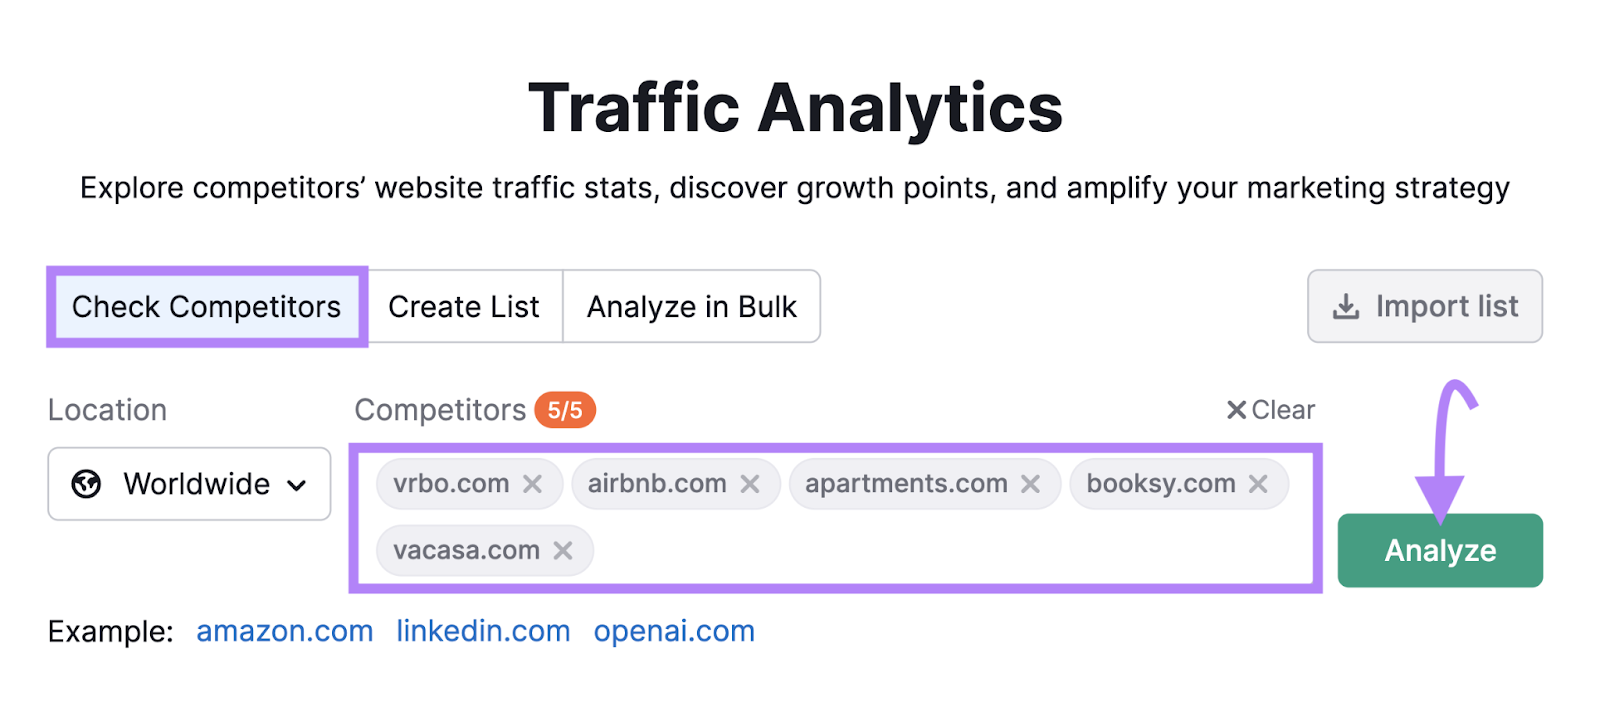 Traffic Analytics tool search bar